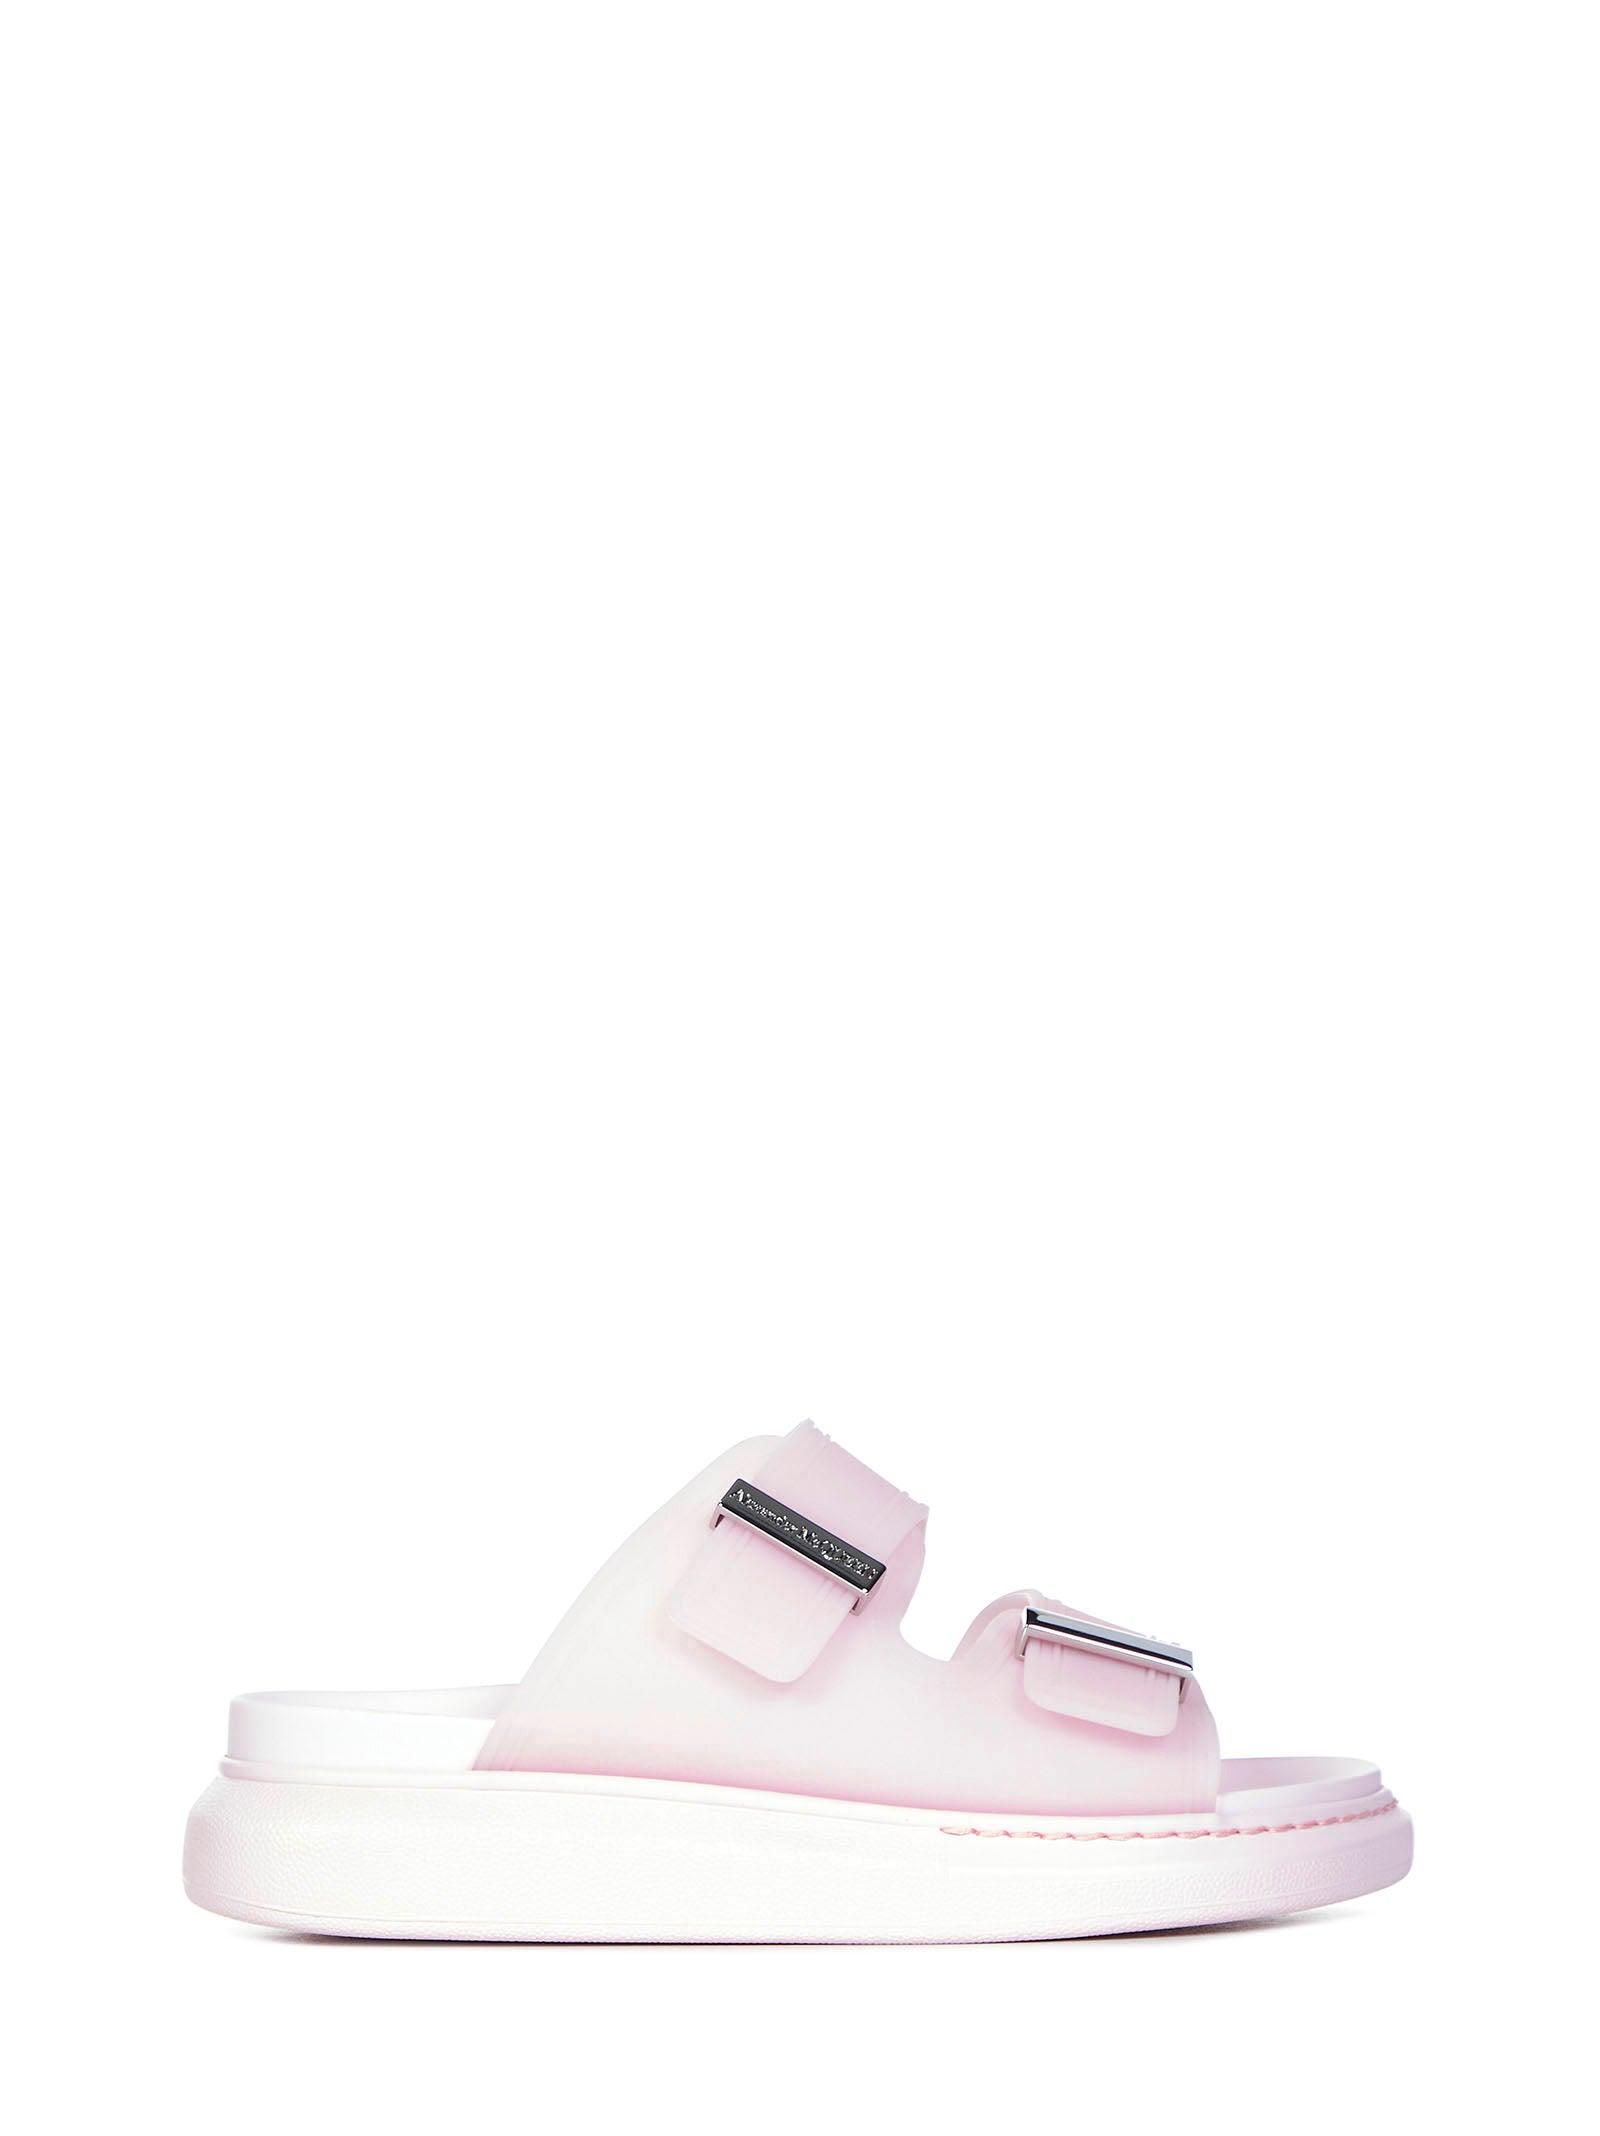 Alexander McQueen Sandals Pink | Lyst